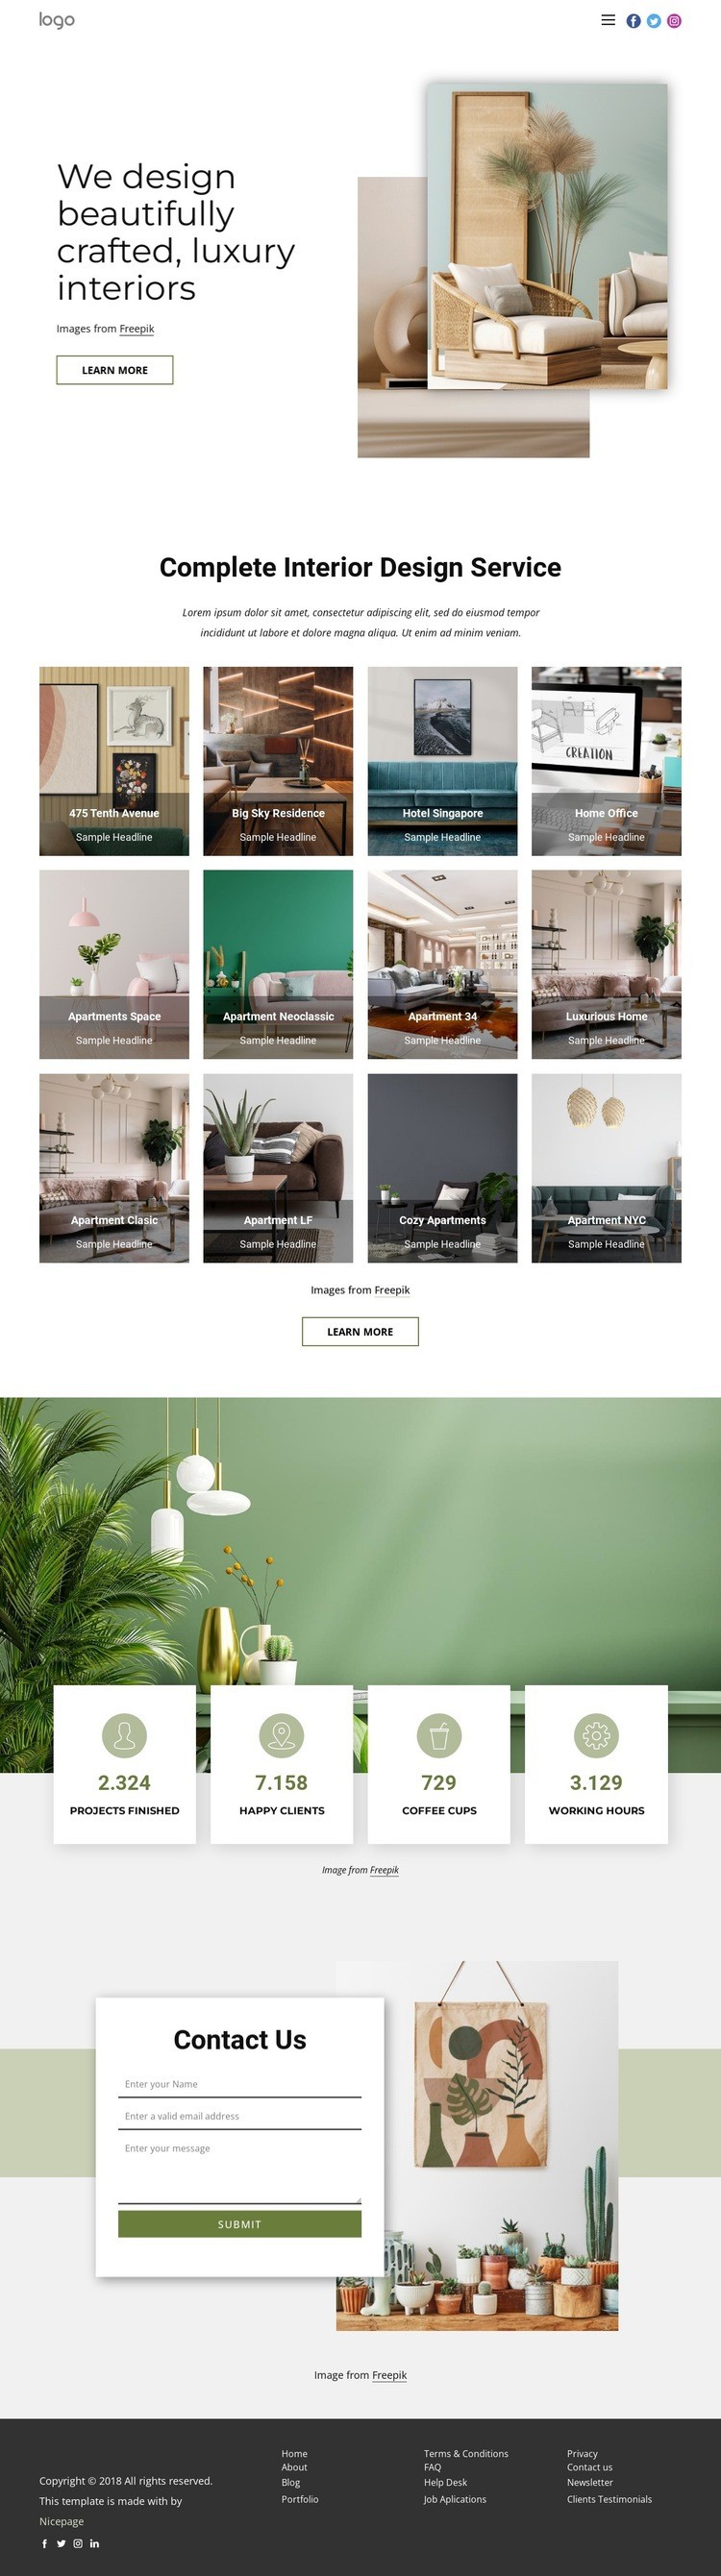 We design luxury interiors Web Page Design